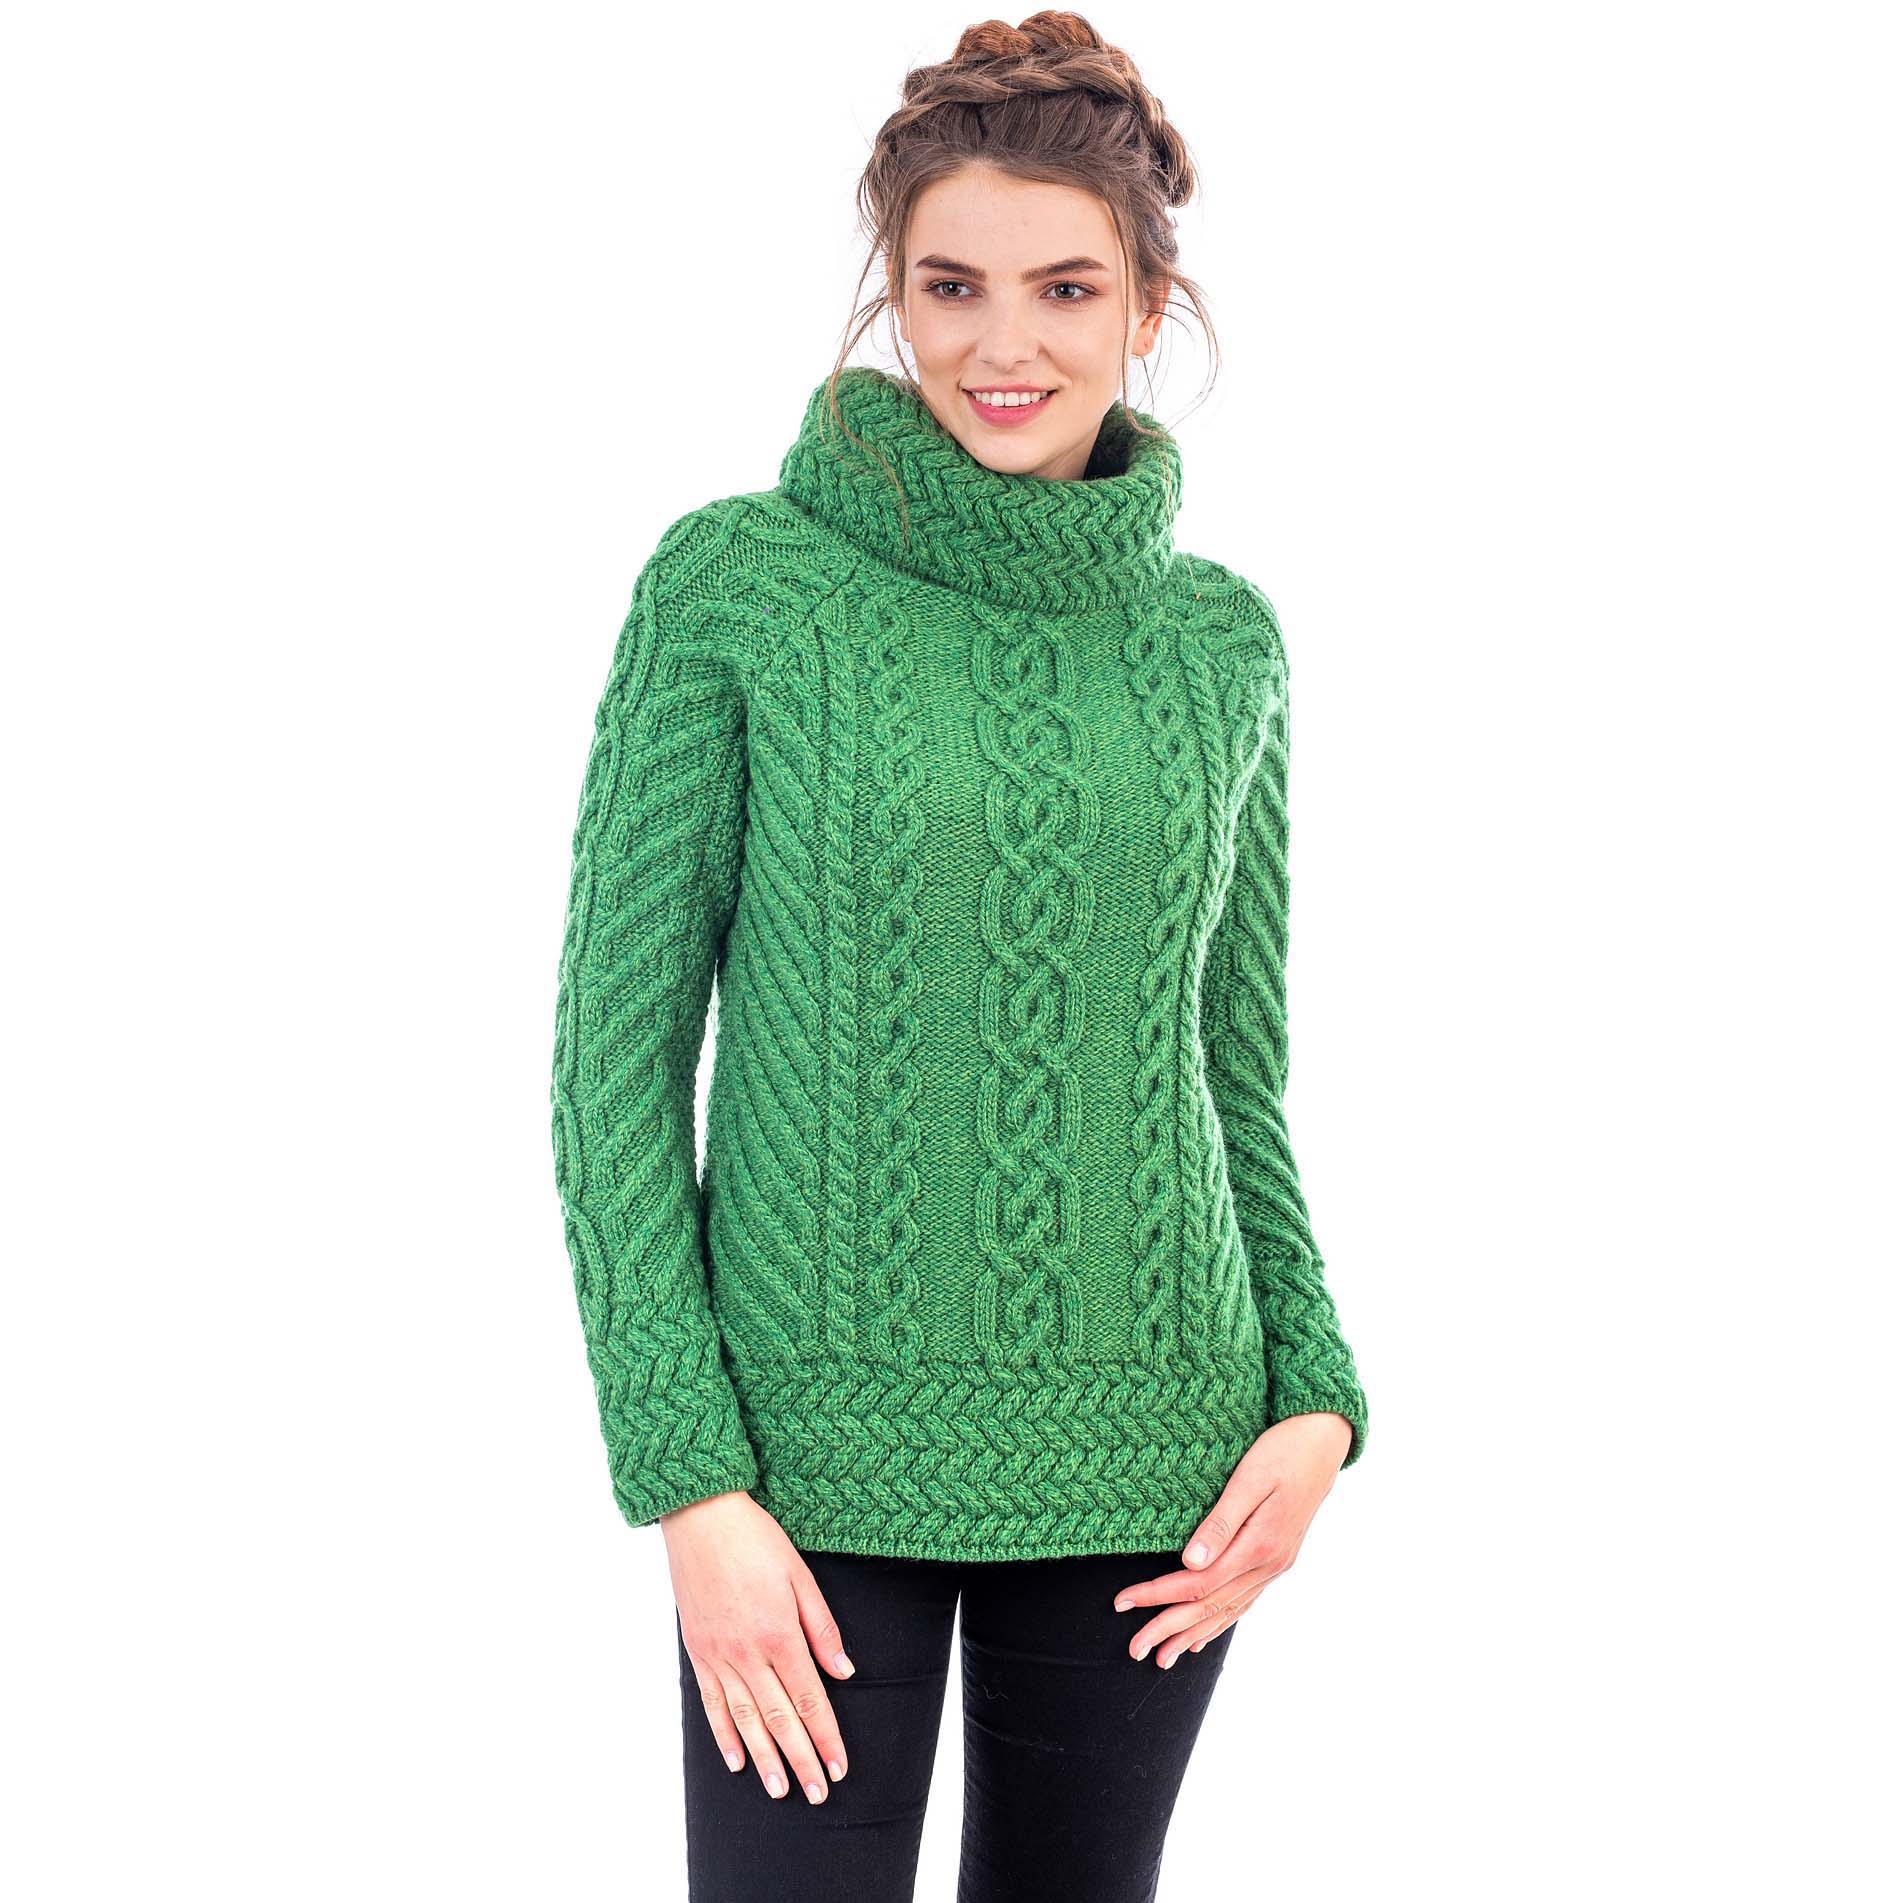 https://www.irishshop.com/graphics/products/large/clsa10110-irish-merino-wool-aran-knit-cowl-neck-ladies-sweater-1.jpg